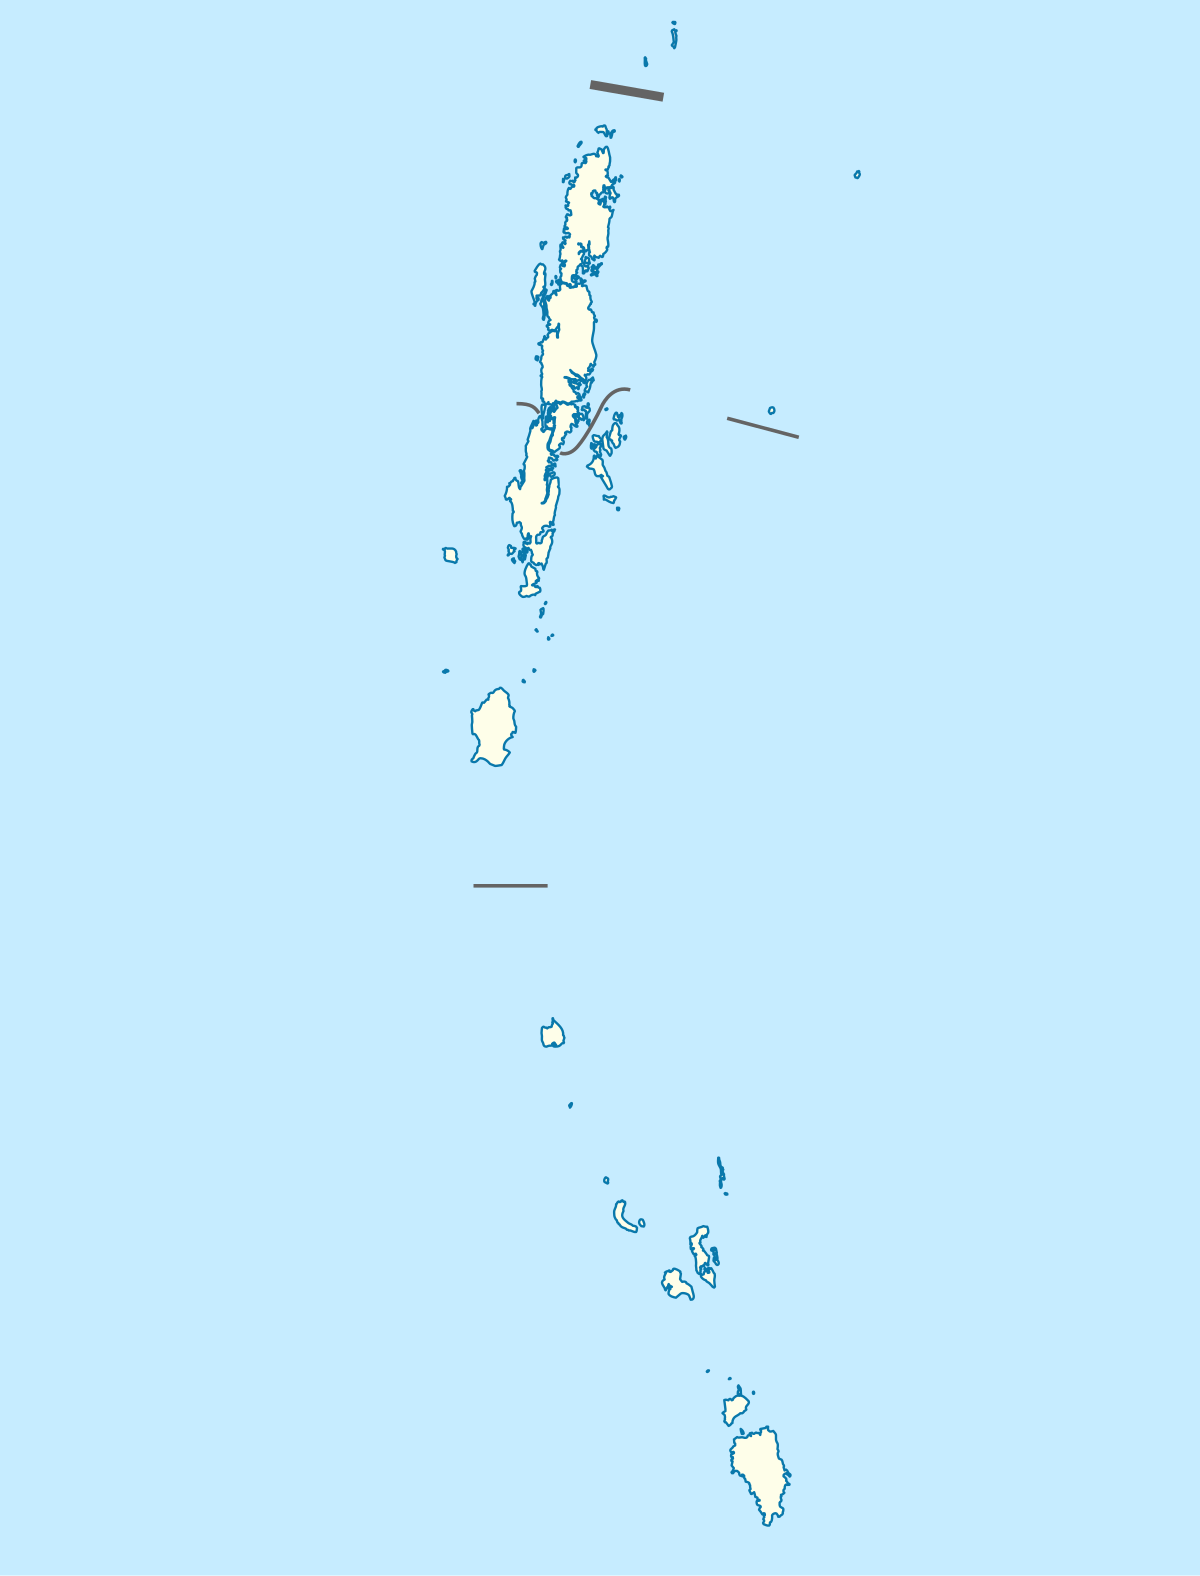 Andaman and Nicobar Islands - Wikipedia